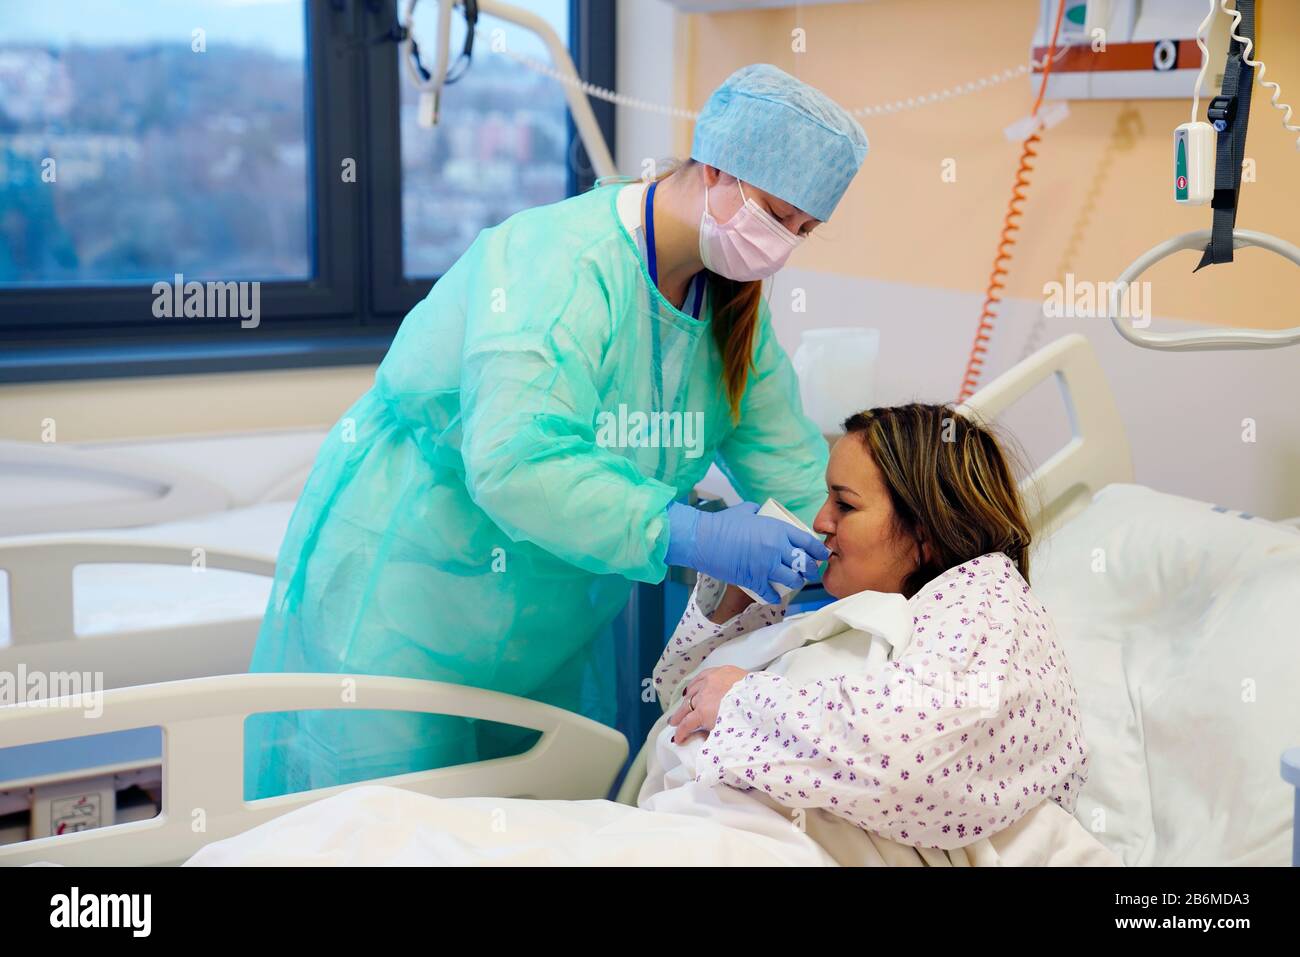 Ropa quirurgica fotografías e imágenes de alta resolución - Alamy